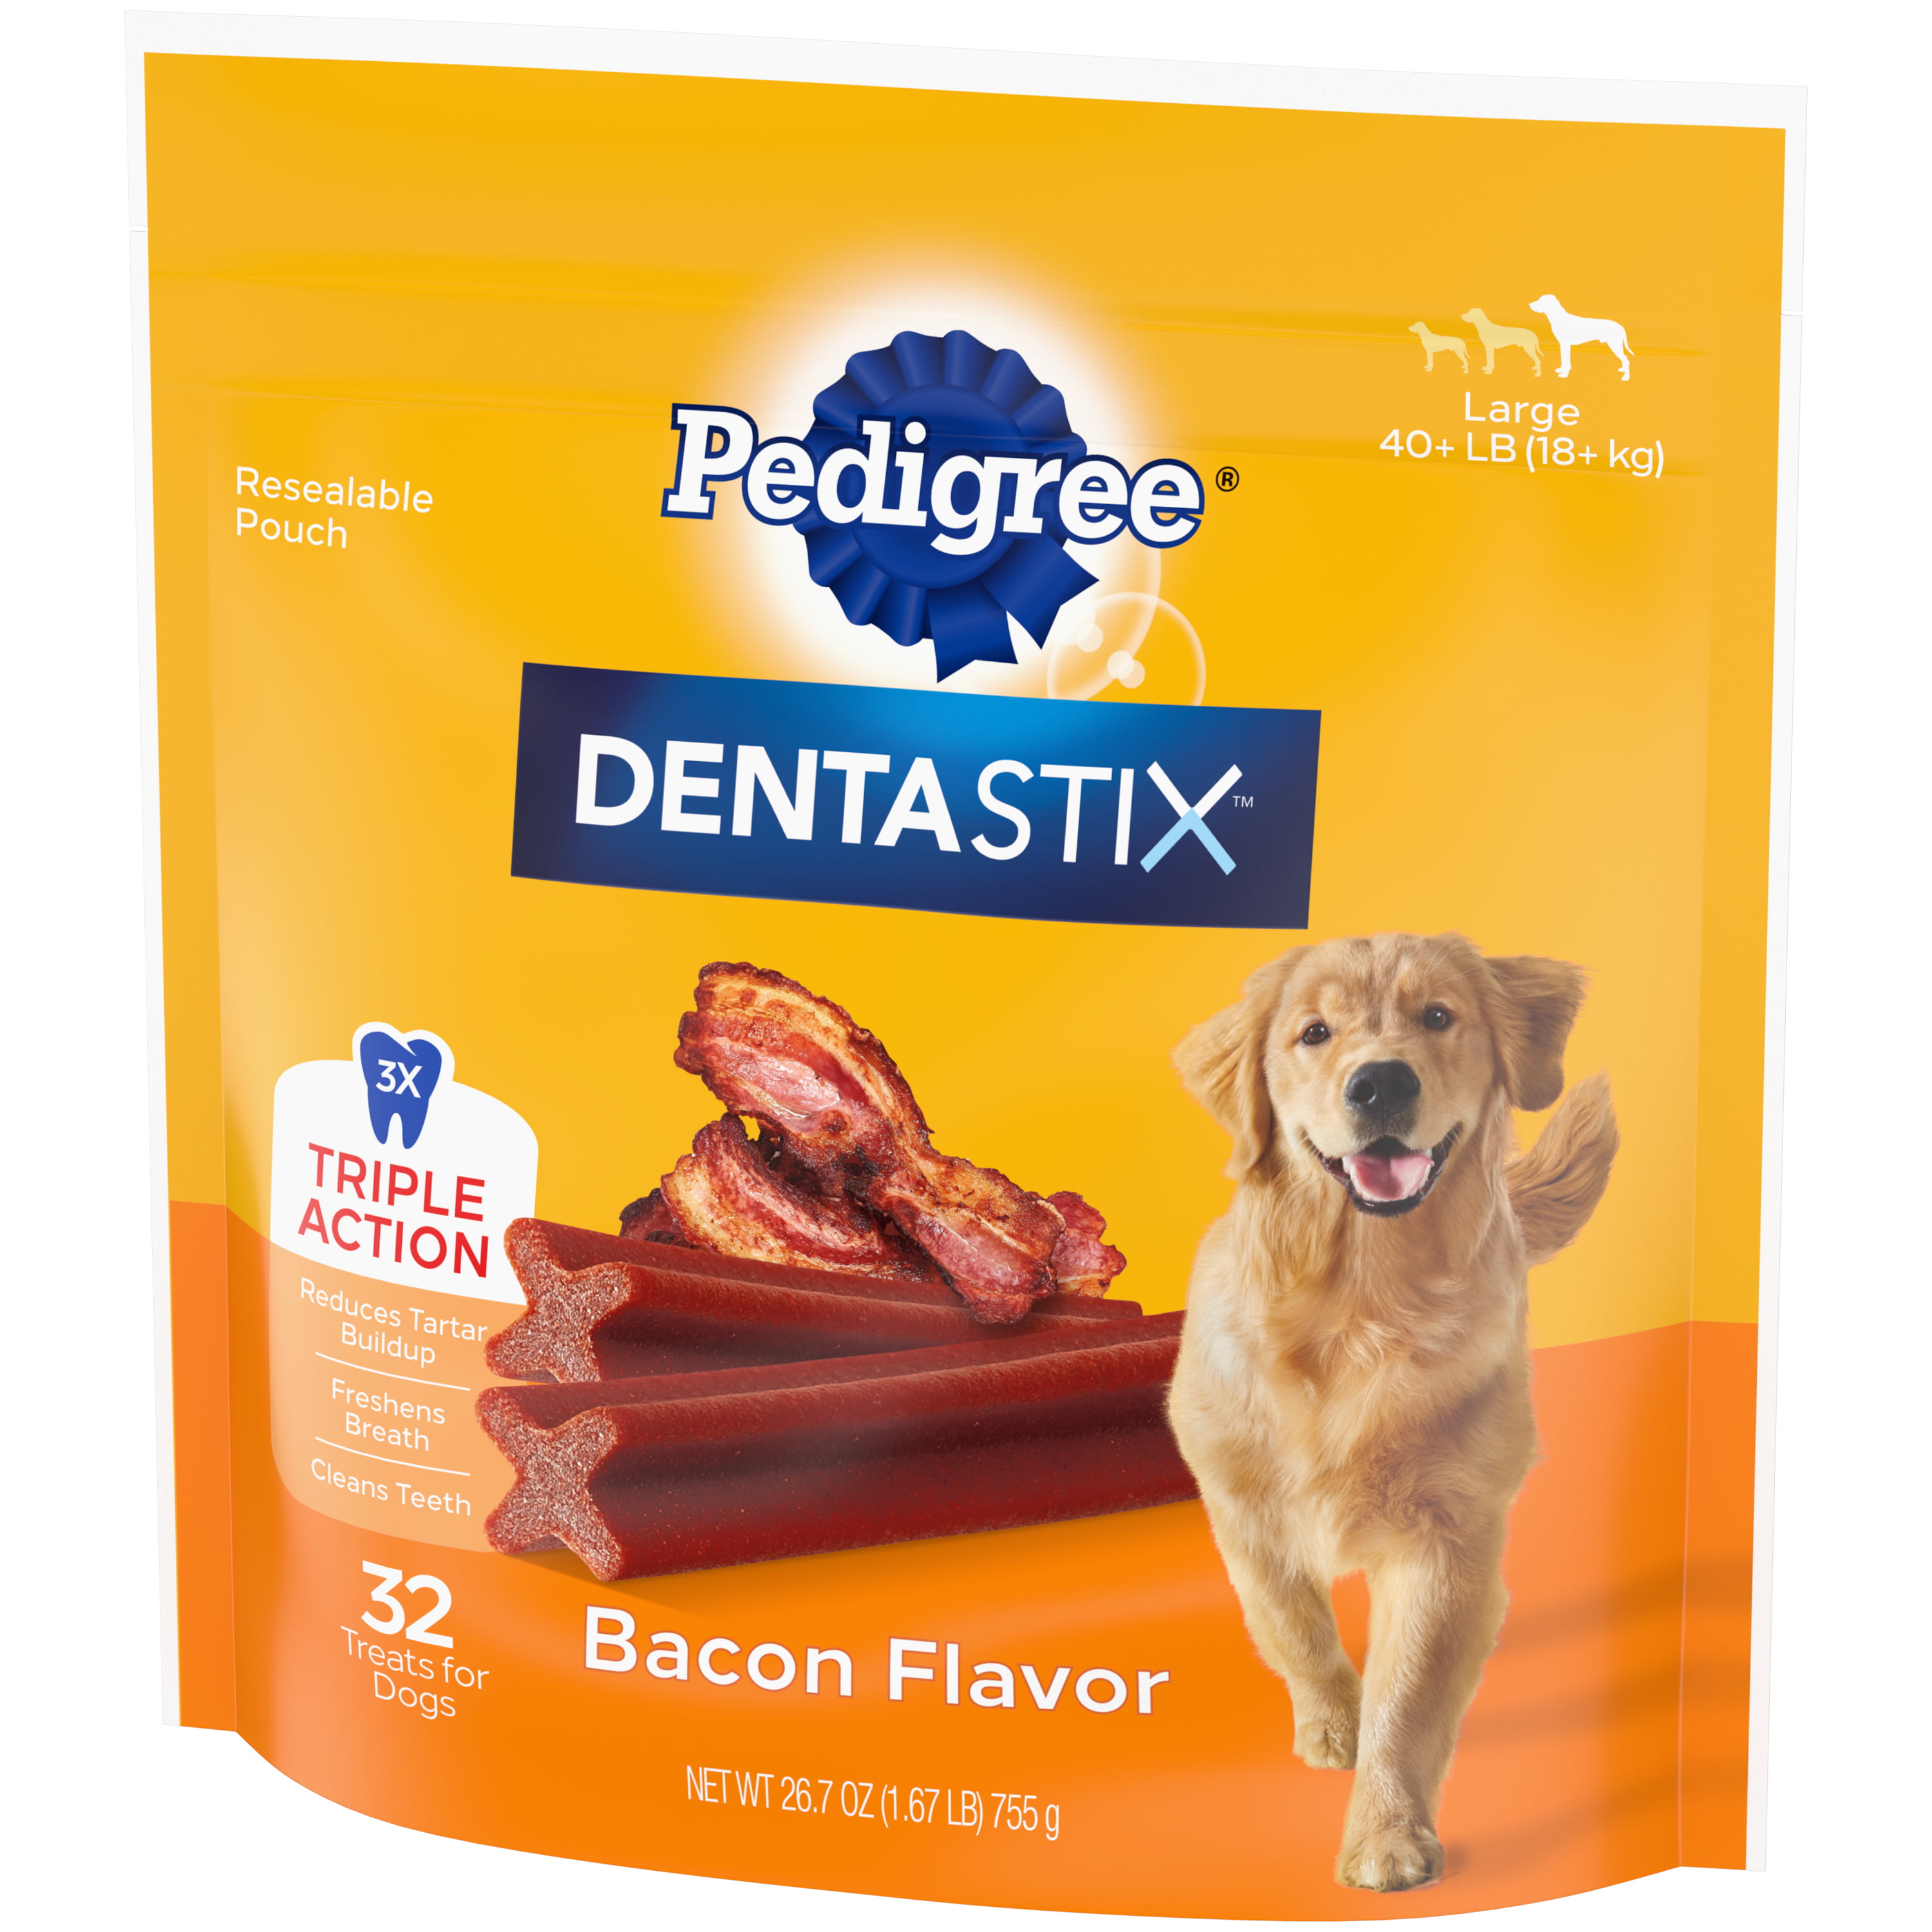 Pedigree Dentastix Bacon Flavor Large Dental Bones Treats for Dogs, 1.72 lb. Pack (32 Treats) - 2